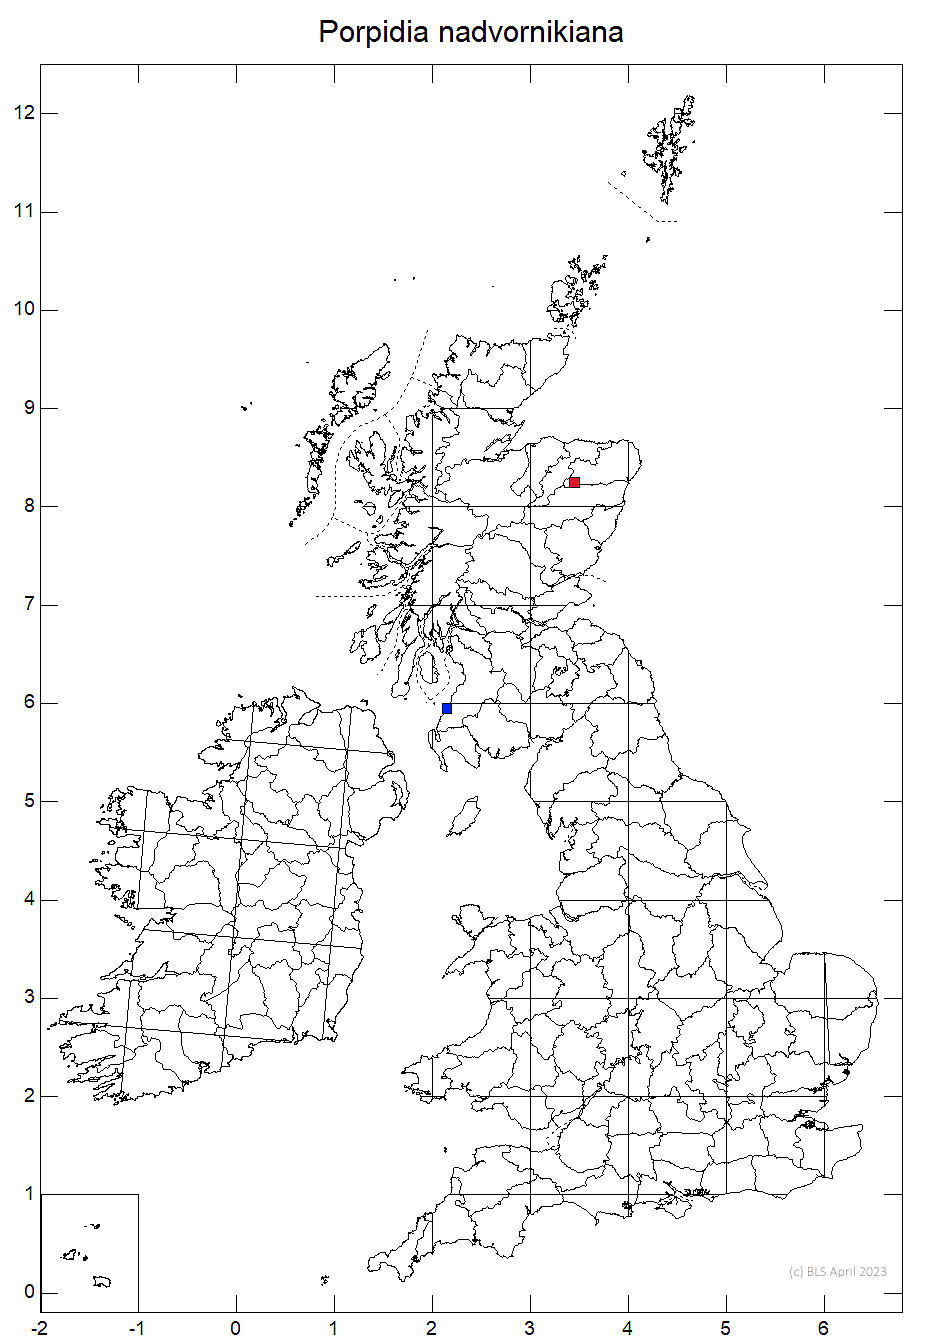 Porpidia nadvornikiana 10km sq distribution map